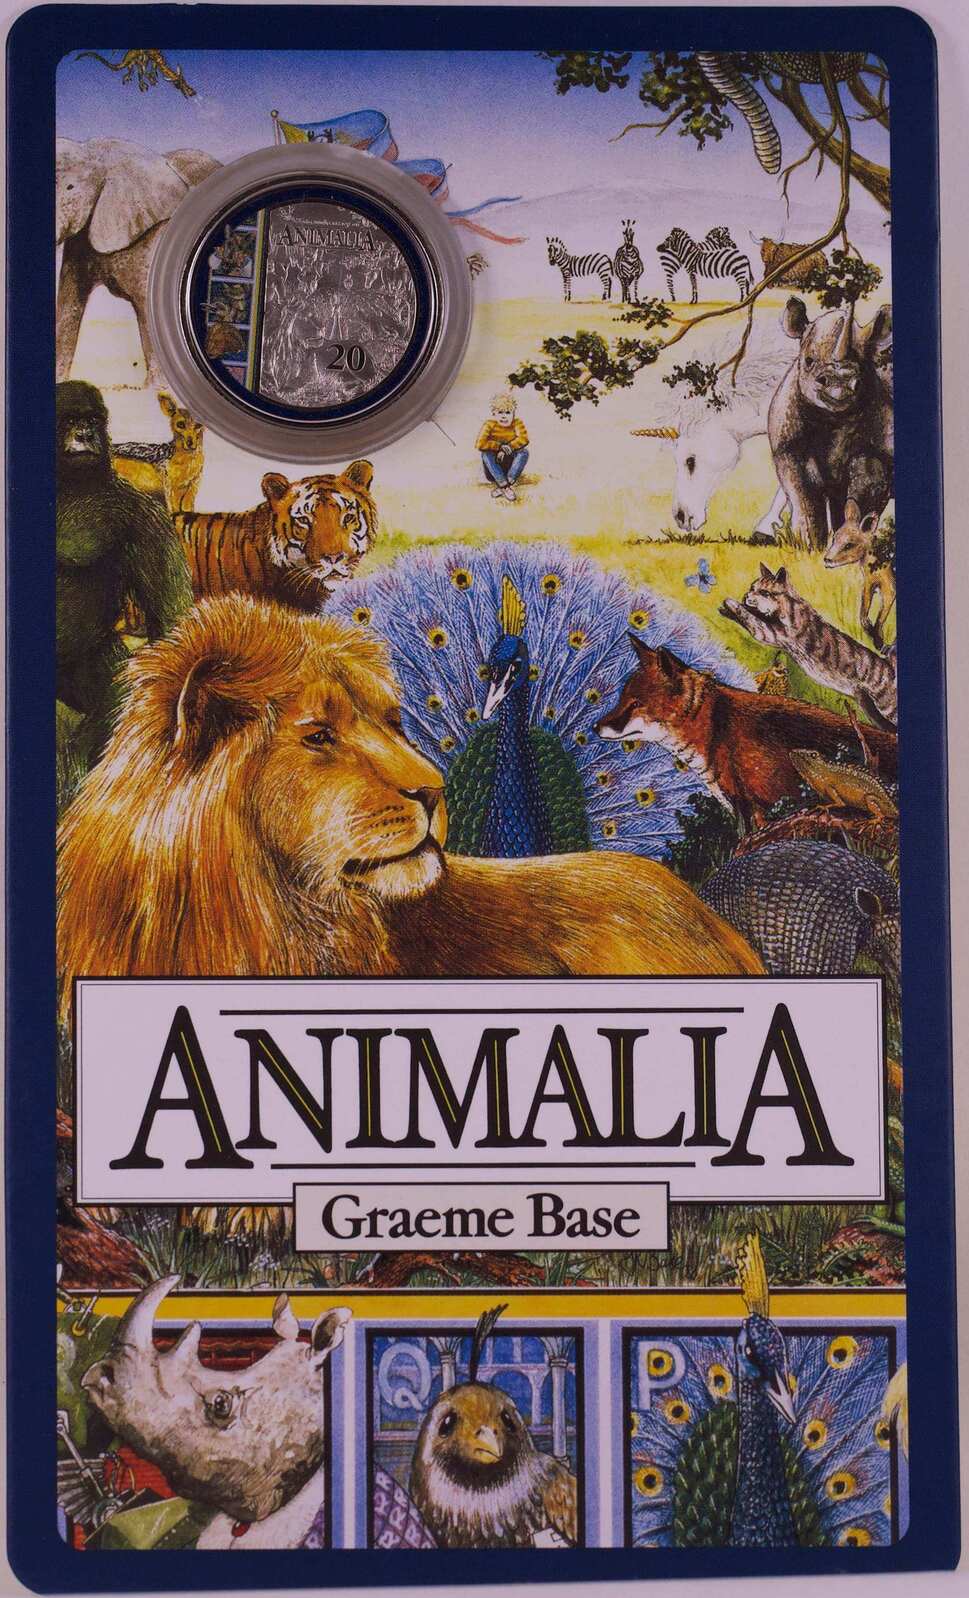 2021 Coloured 20c On Card Animalia Uncirculated product image